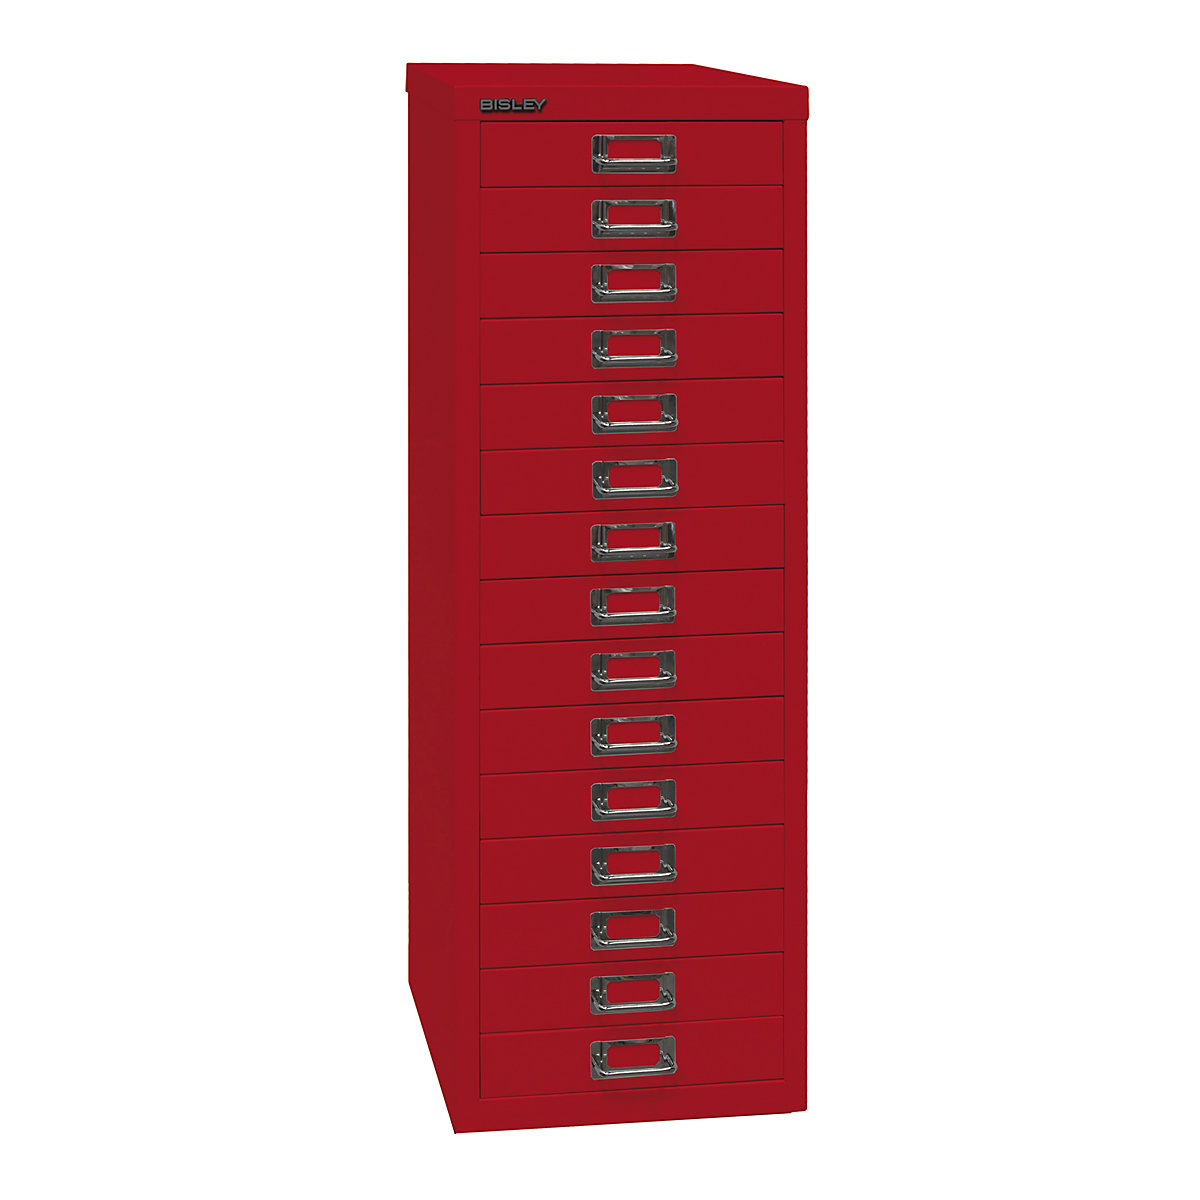 MultiDrawer™ 39 series – BISLEY, A4, 15 drawers, cardinal red-12